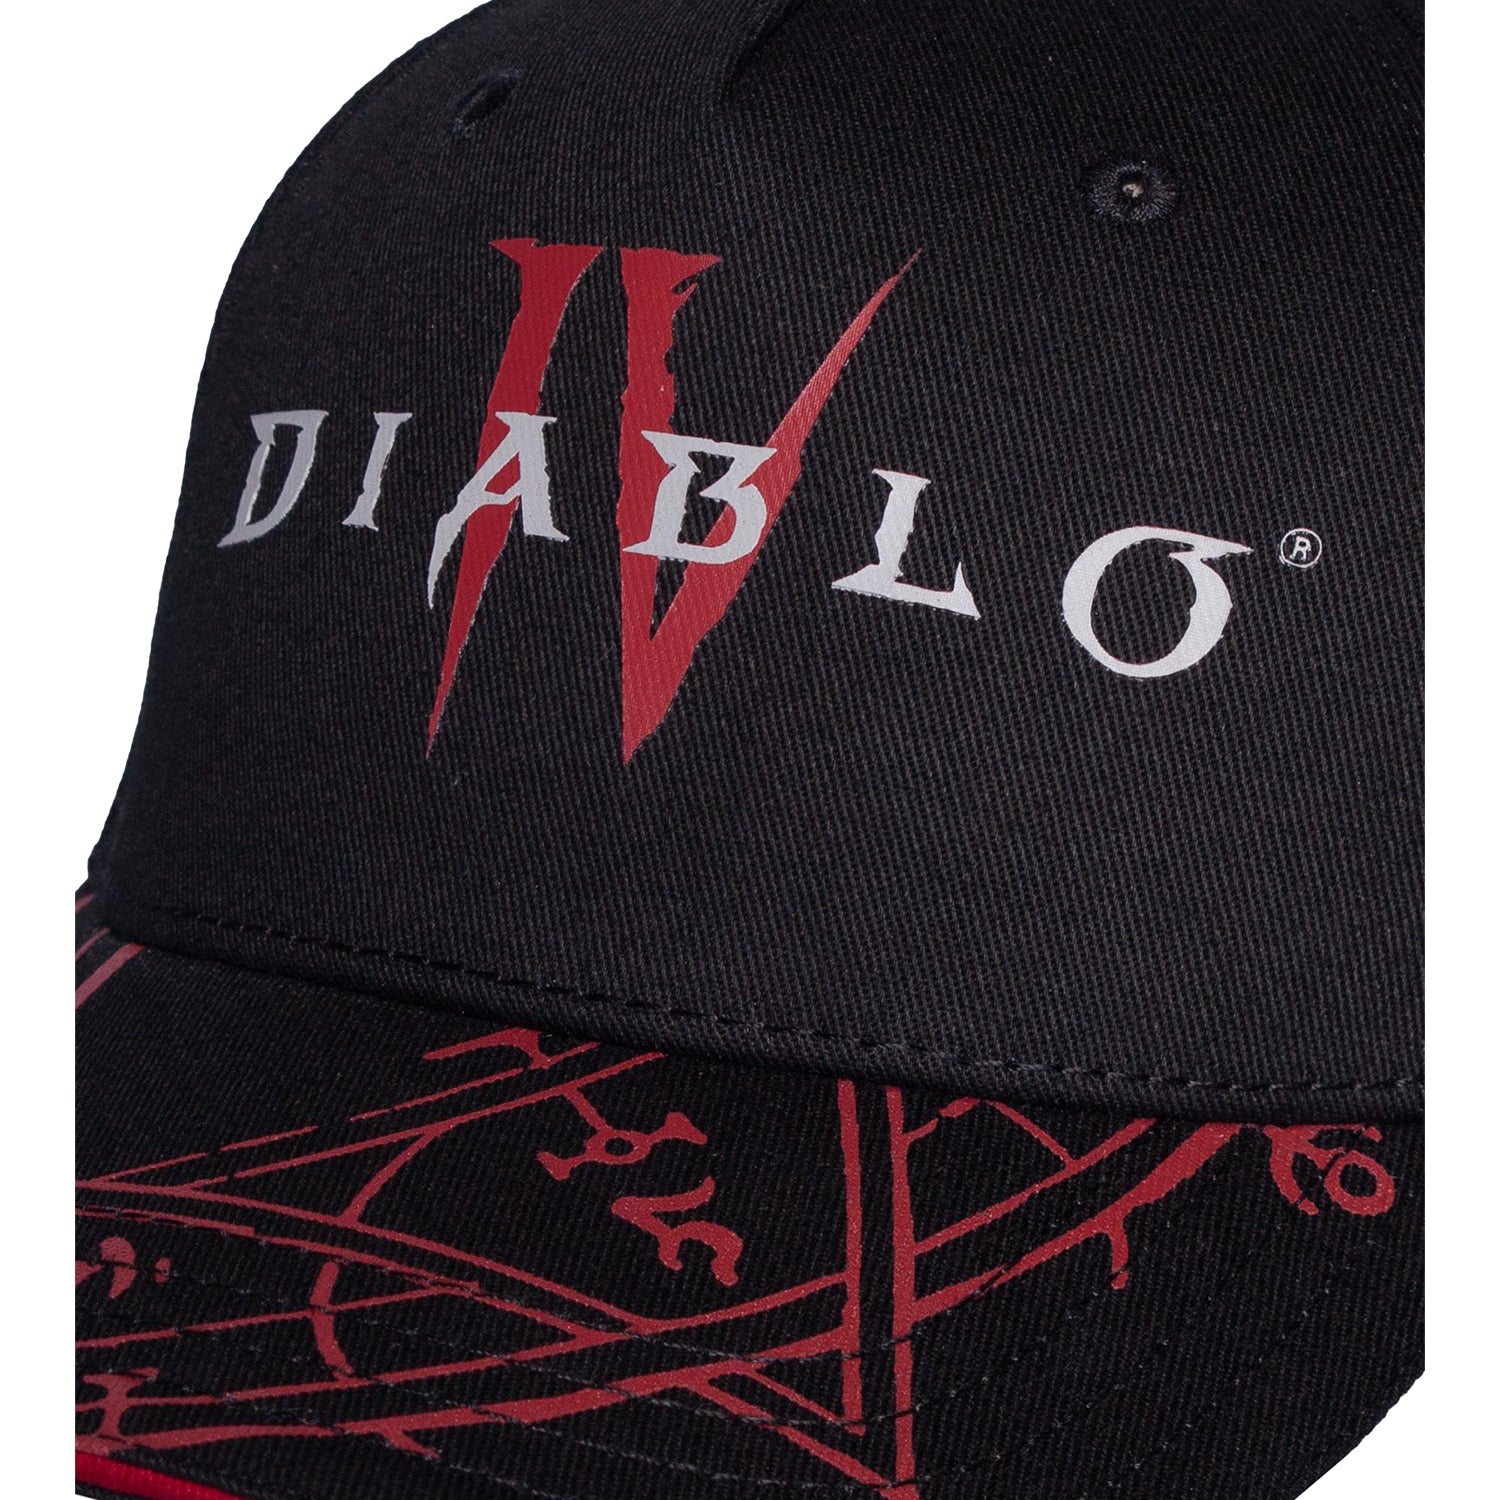 Diablo IV Sigil Snapback Hat - Close Up View